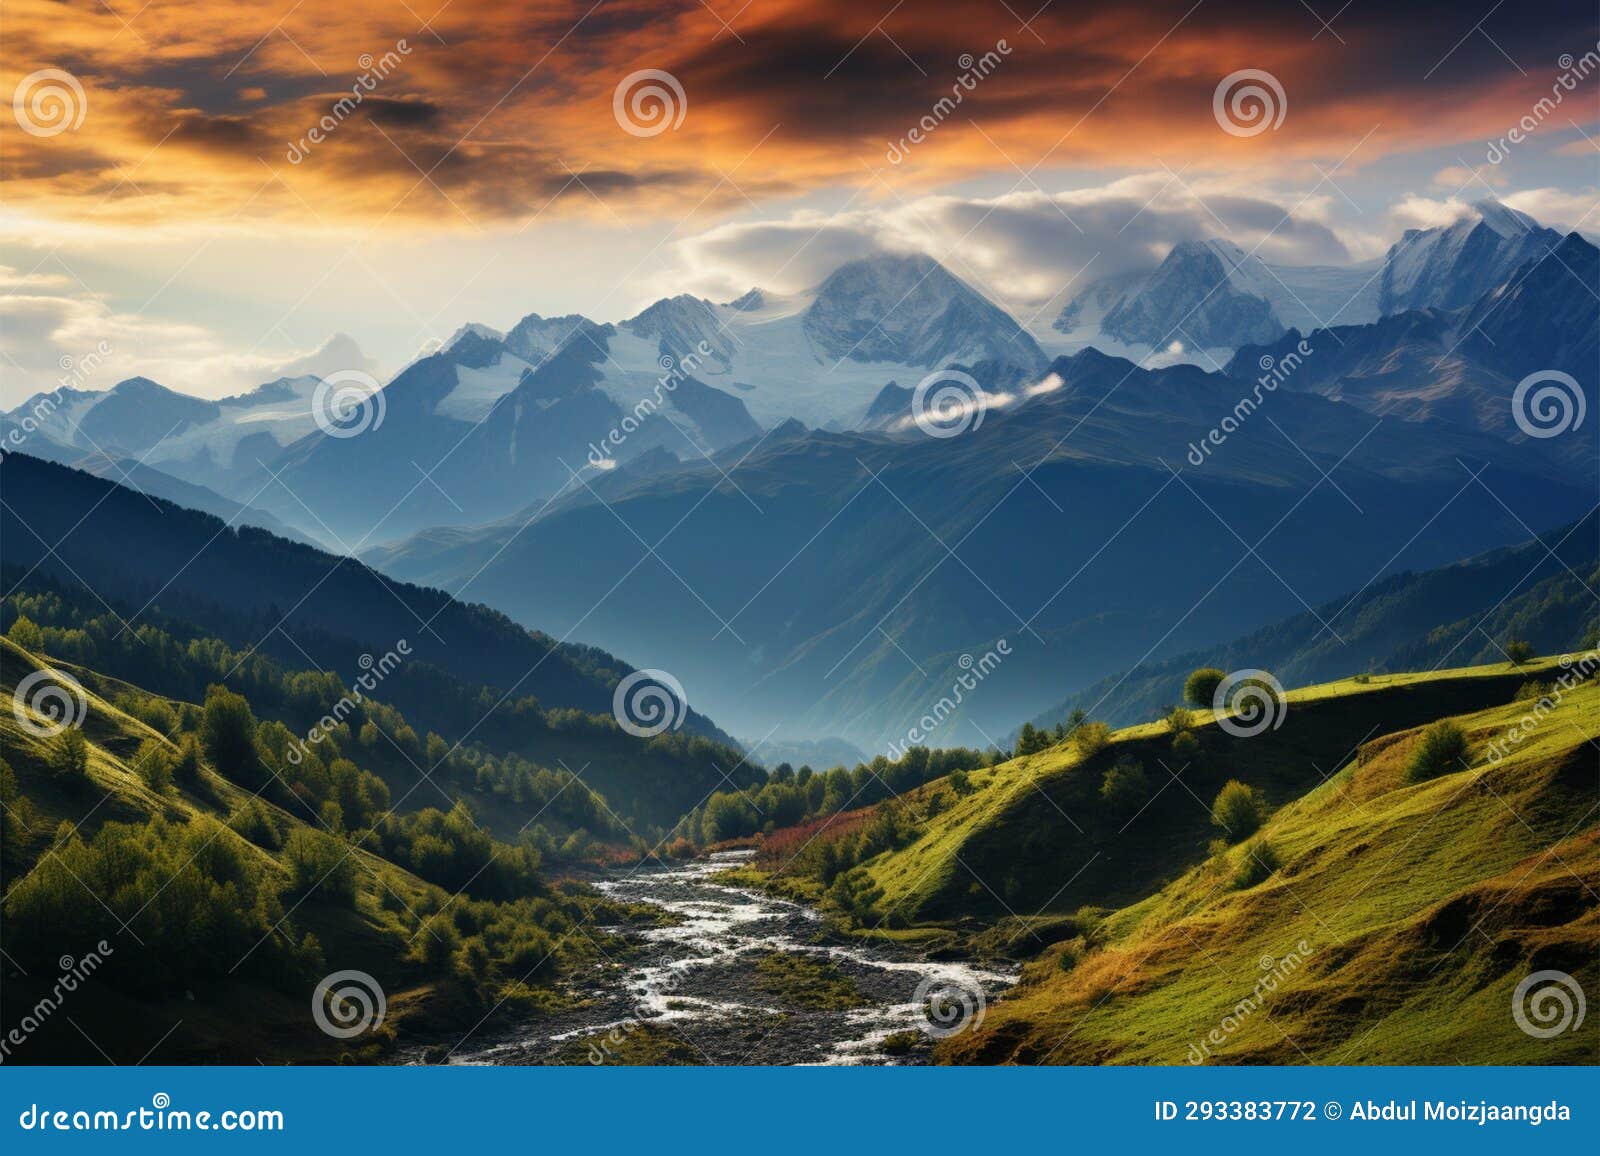 europes svaneti region, a foggy mountain pass in the caucasus